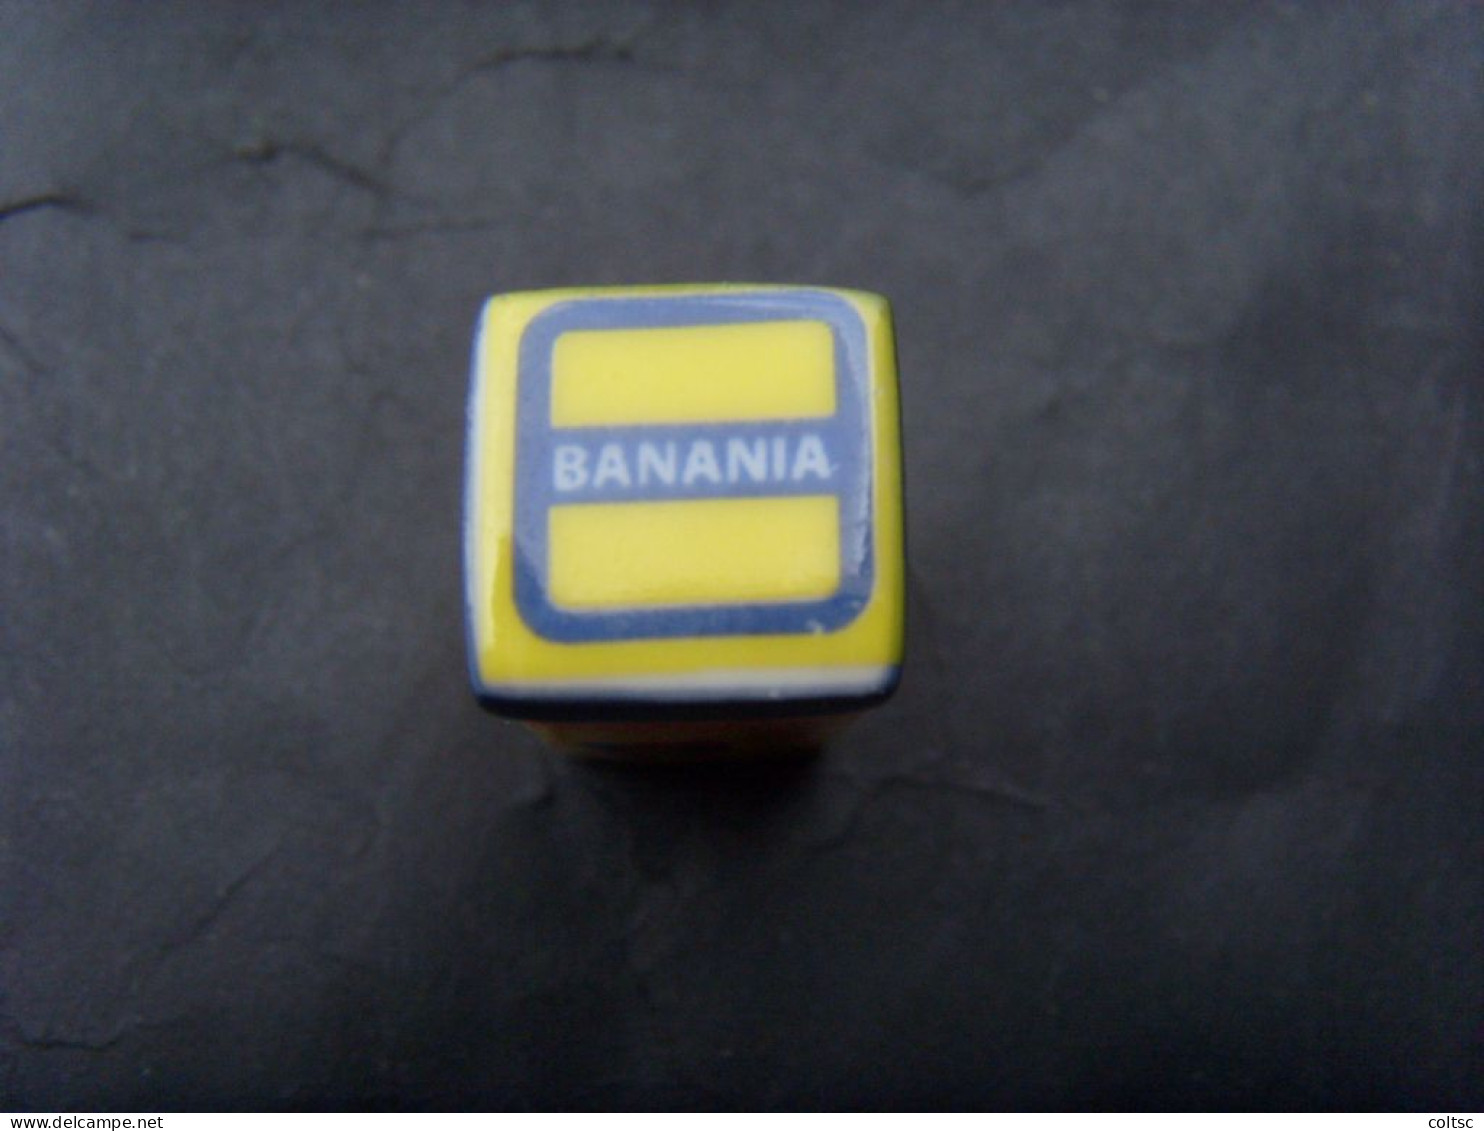 F27- Fève boîte de Banania (2014)